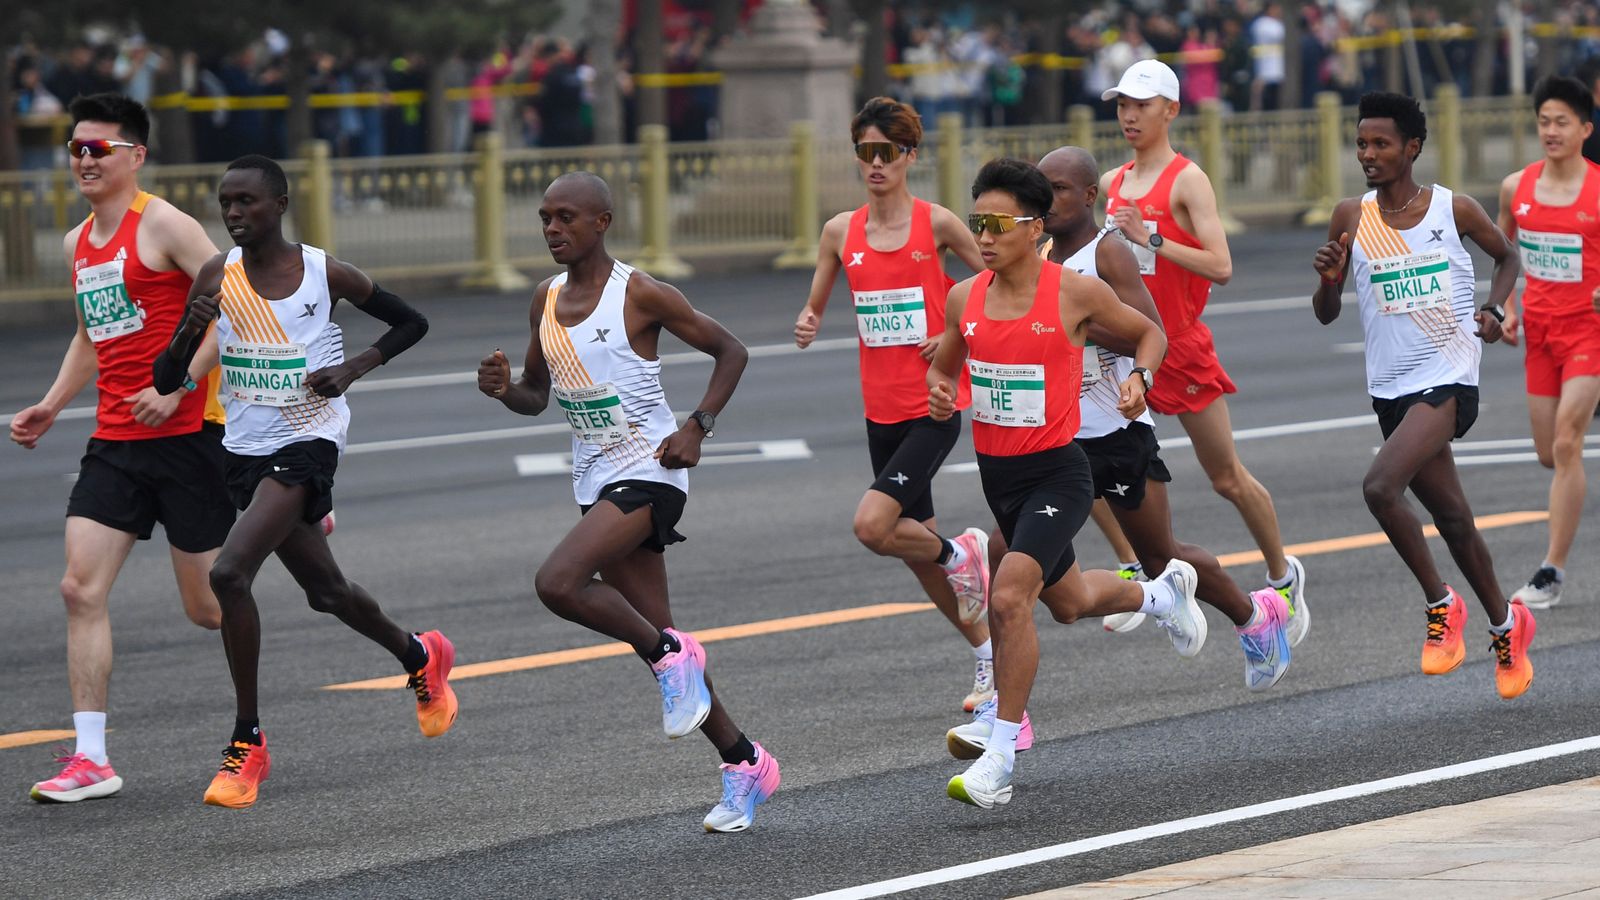 beijing half marathon winner stripped of medal after runners slowed down for him